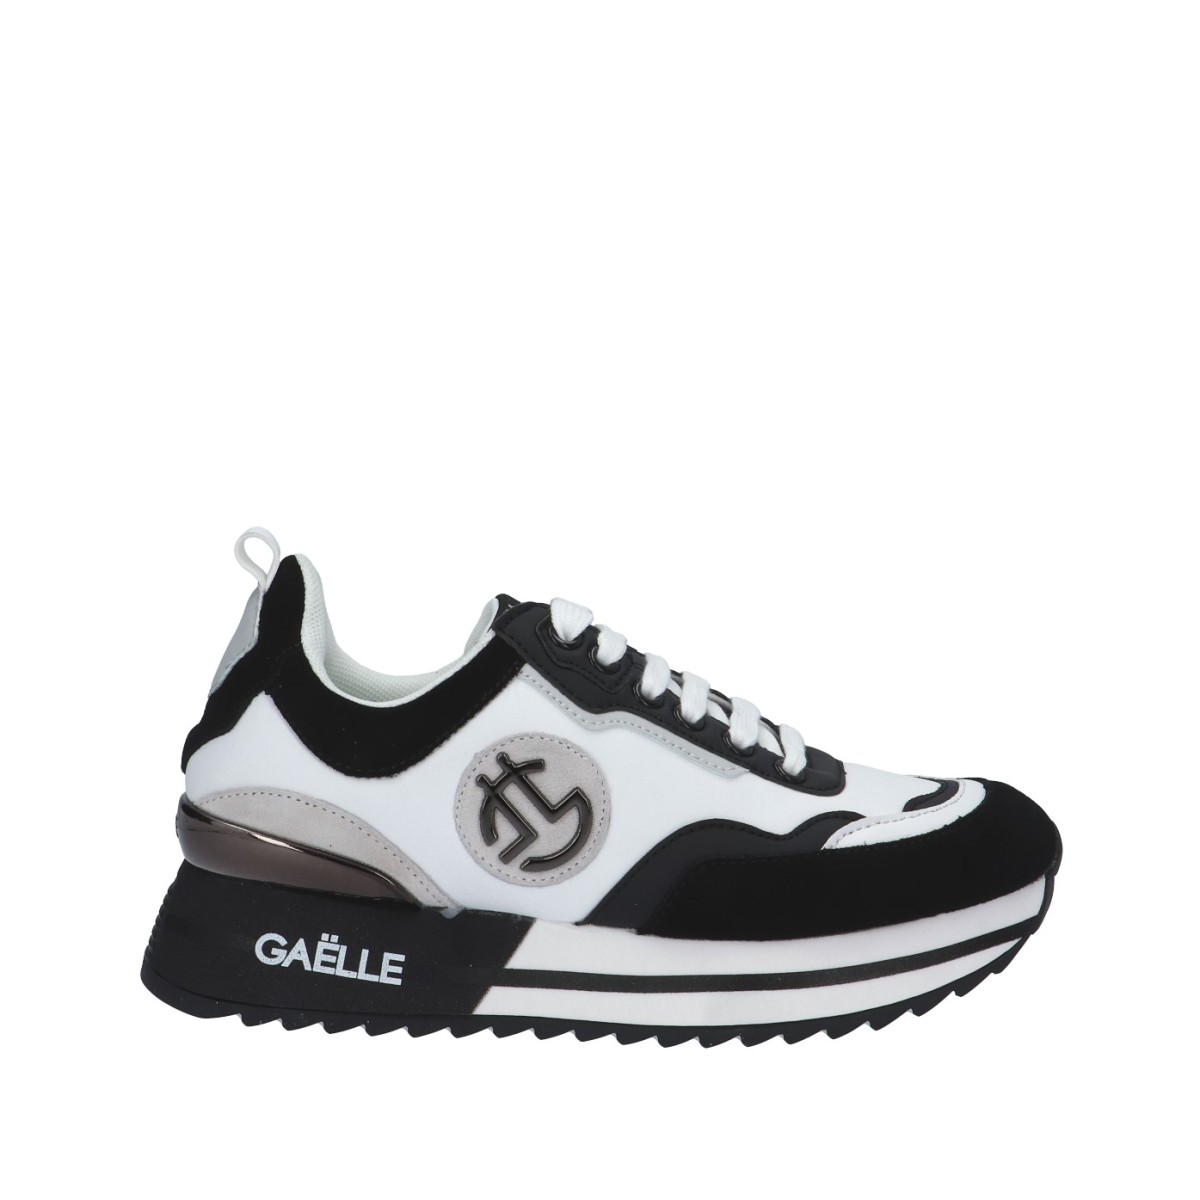 Gaelle Sneaker Bianco/nero Gomma GBCDP3105